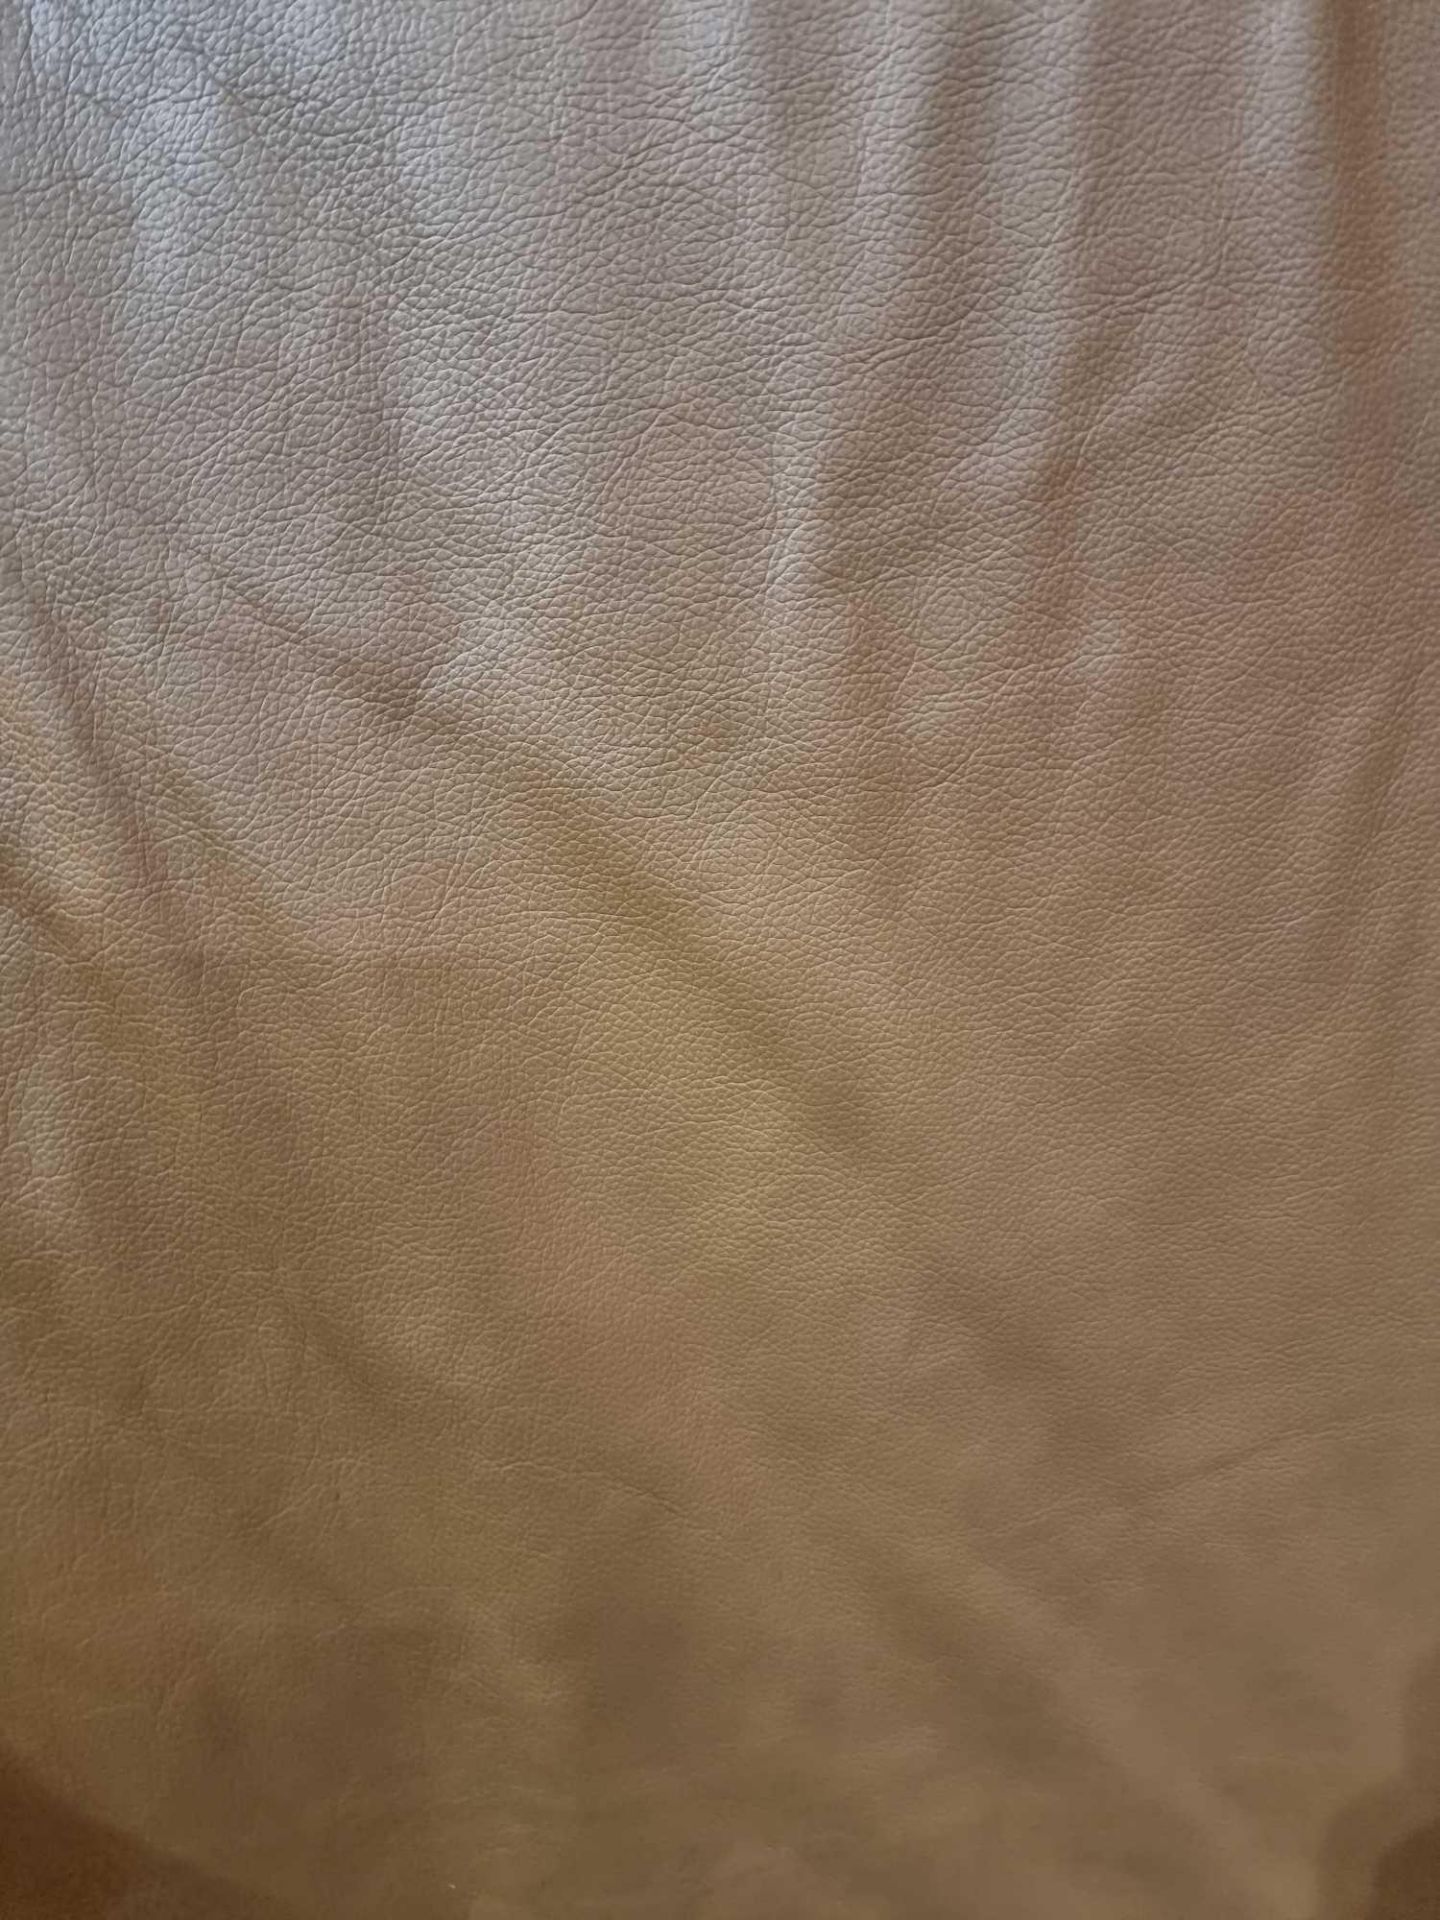 Trim International Dakota Tan Leather Hide approximately 5 28M2 2 4 x 2 2cm ( Hide No,182) - Bild 2 aus 2